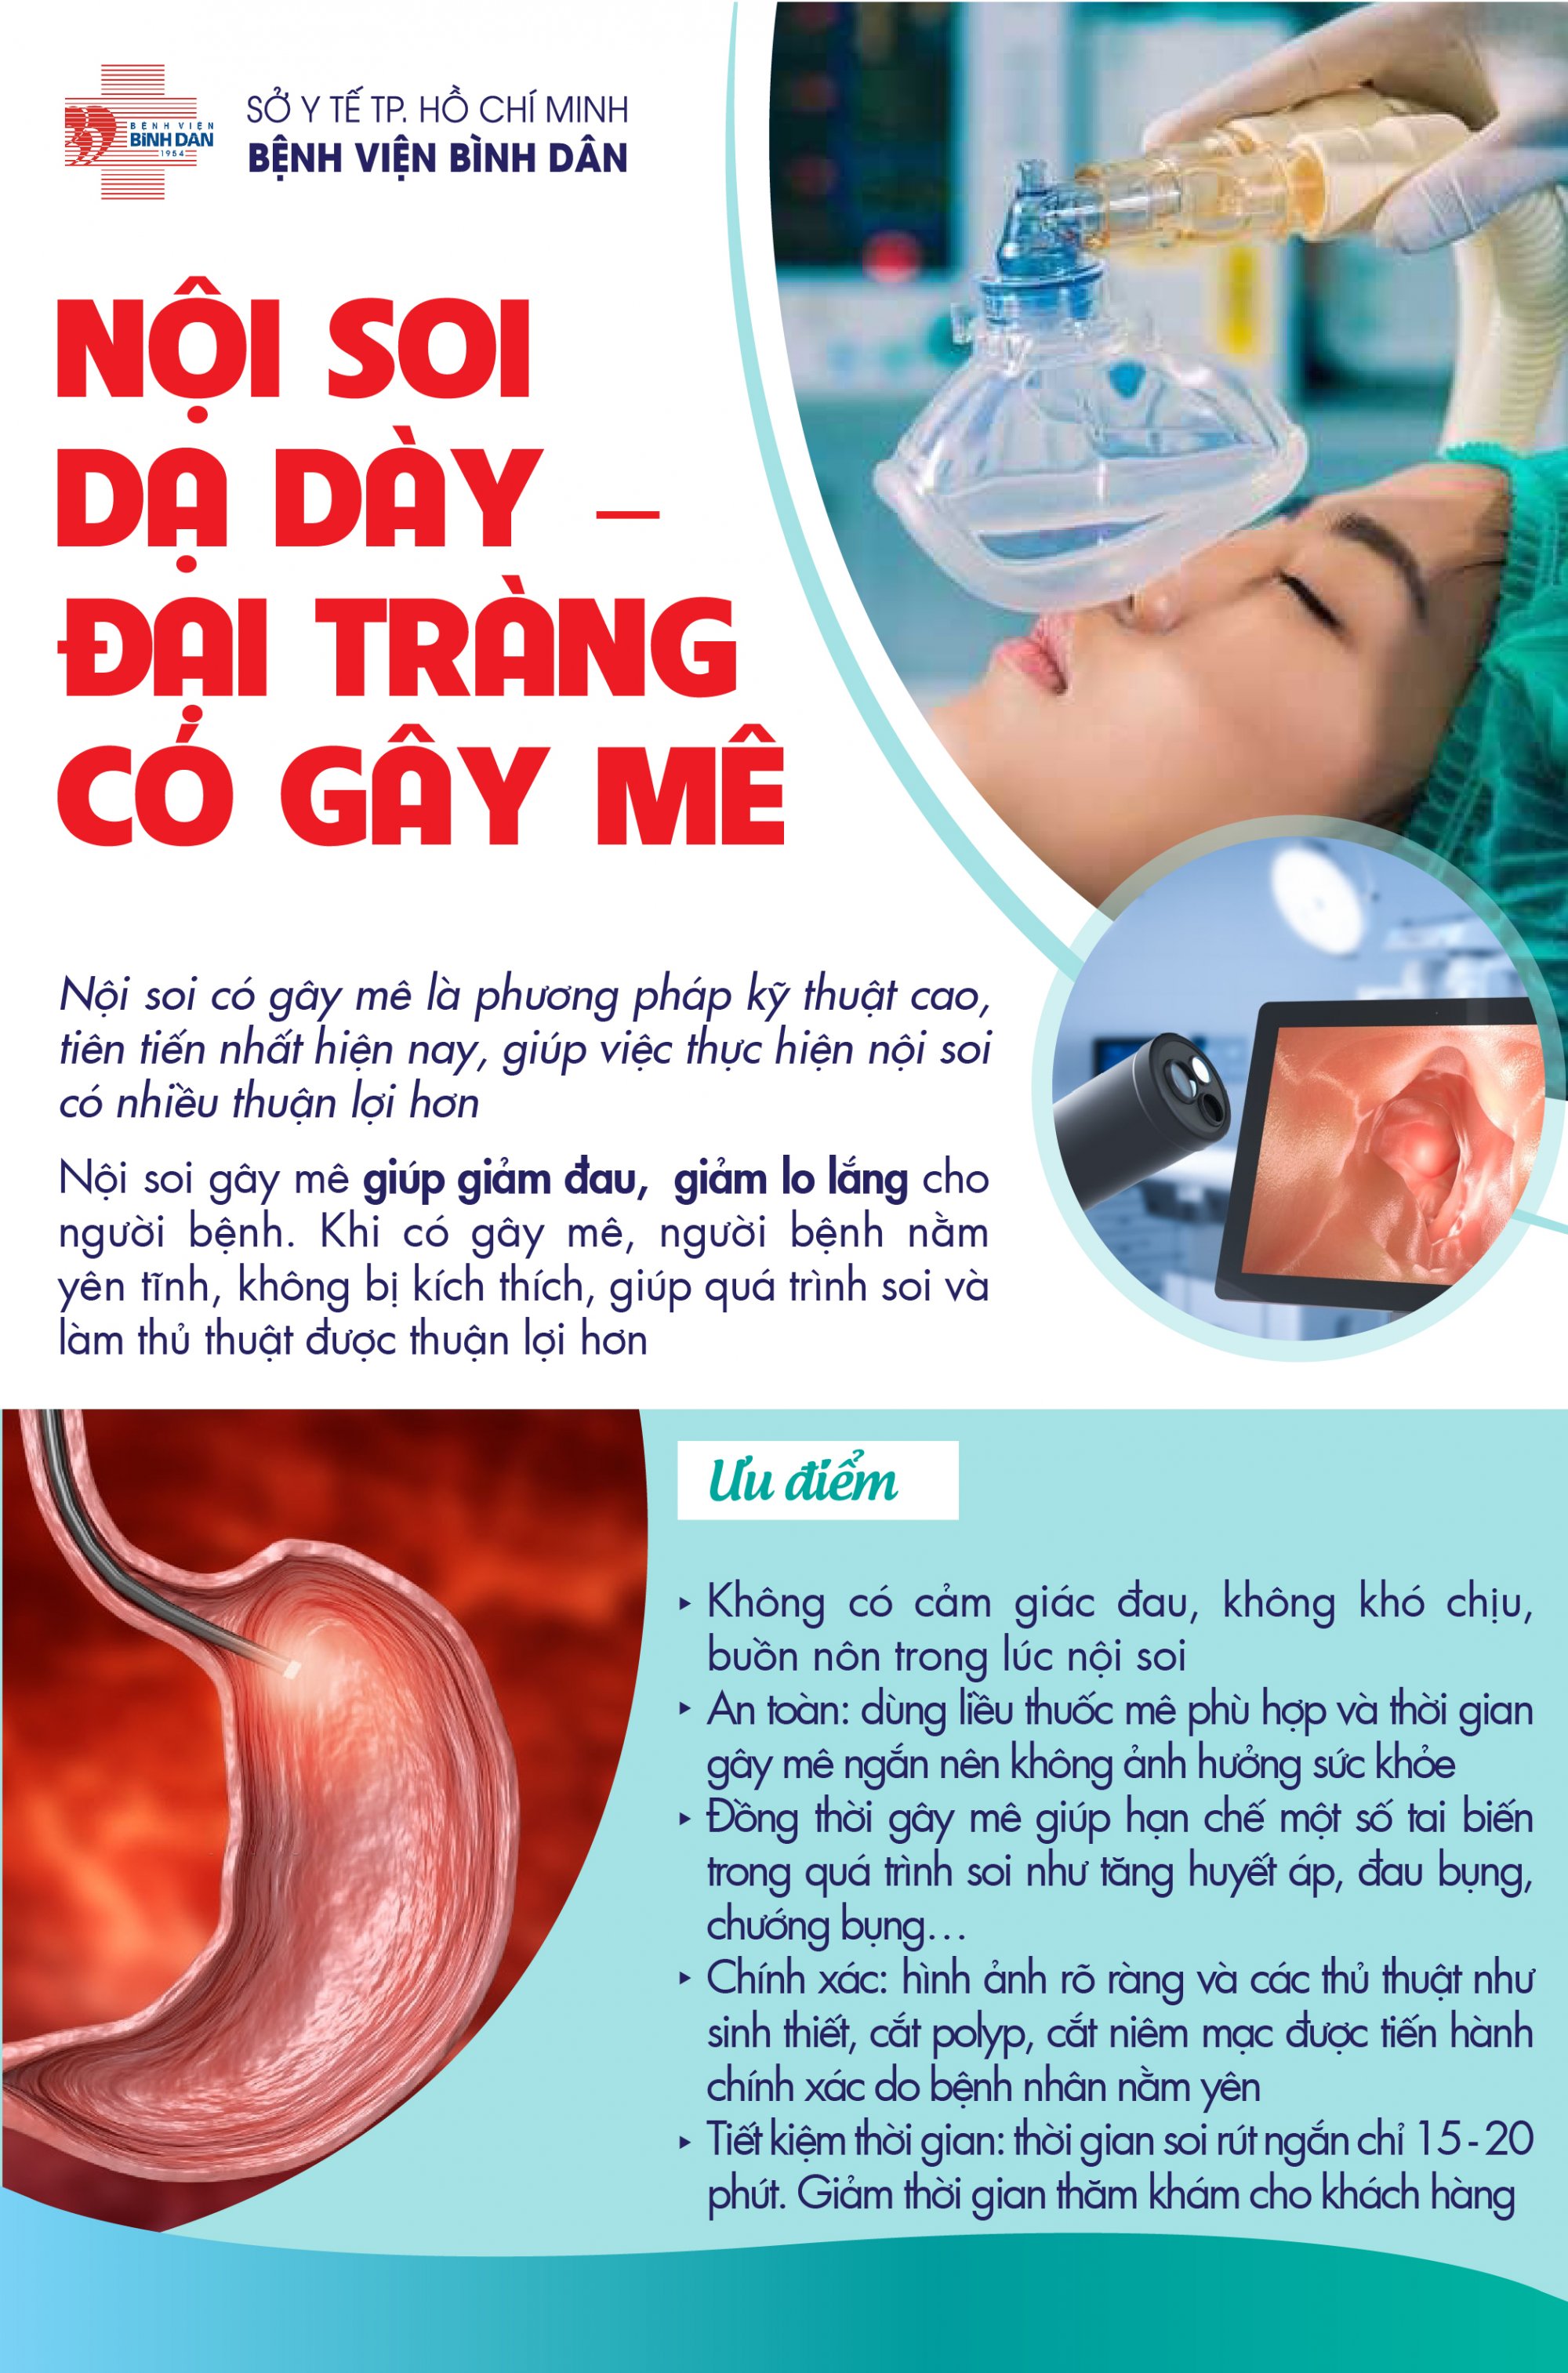 26-Poster-NSDaDay-gayMe